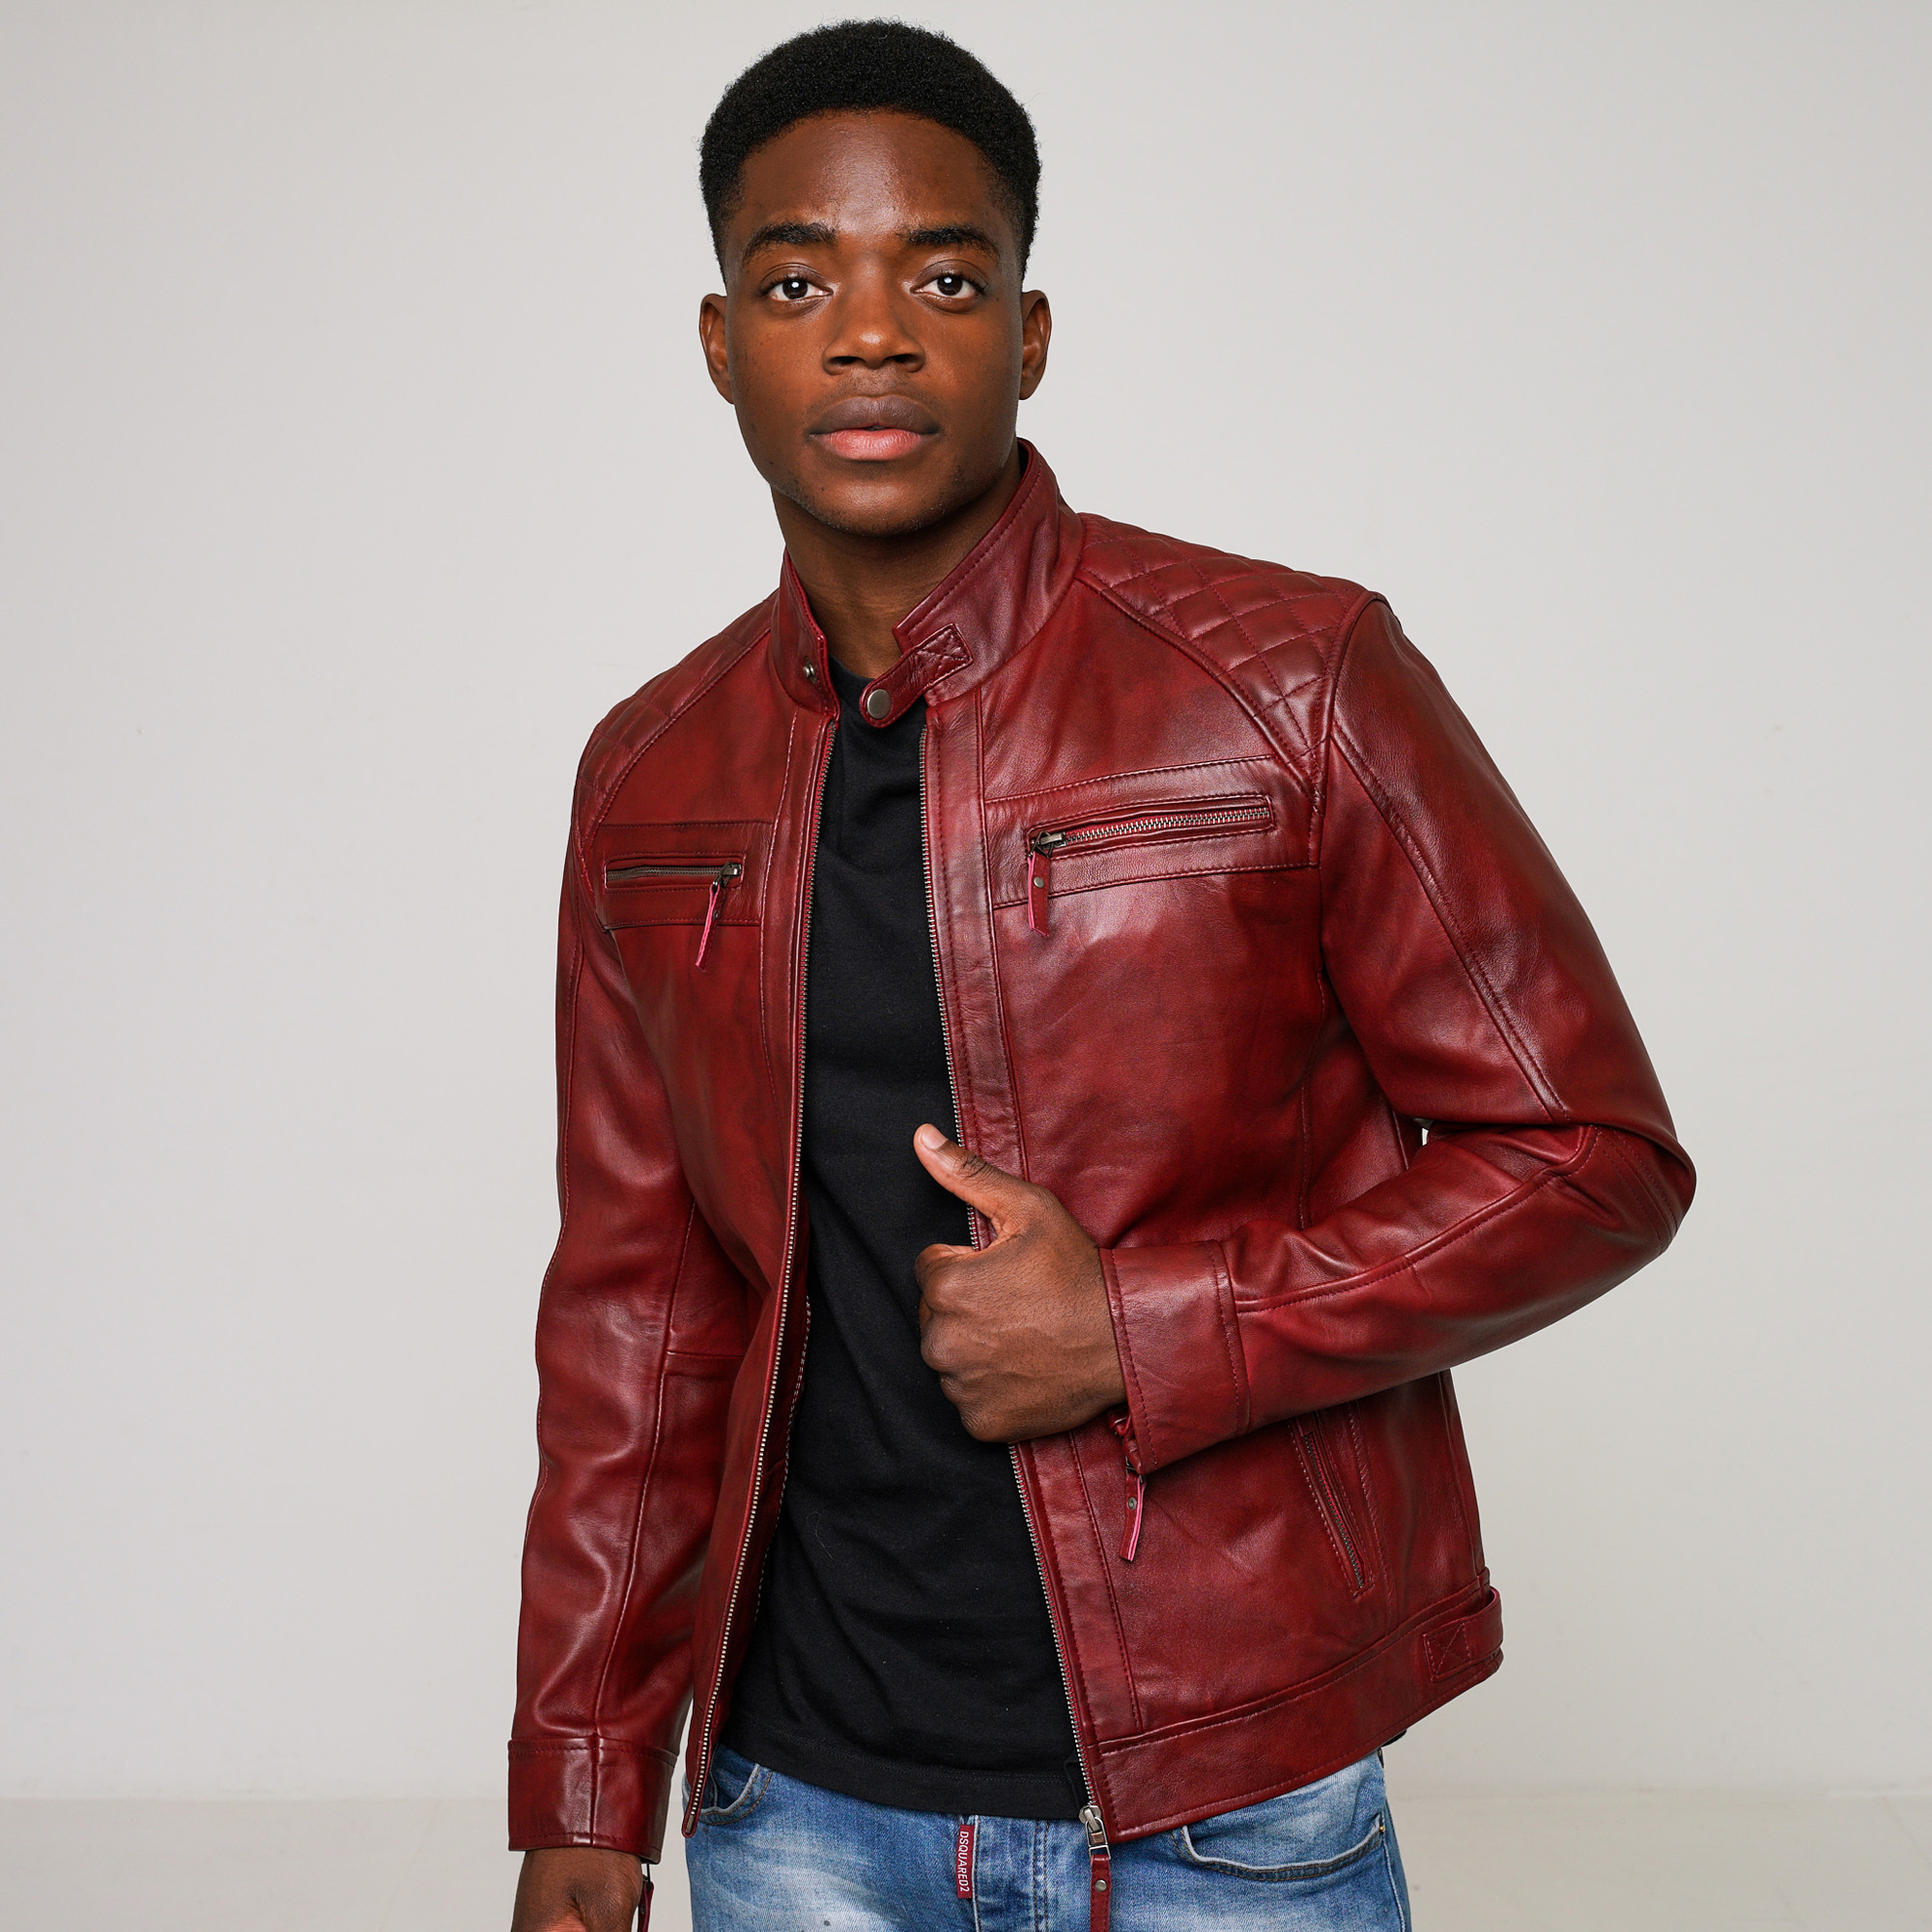 43% off on Men's Genuine Leather Elite Jacket | OneDayOnly